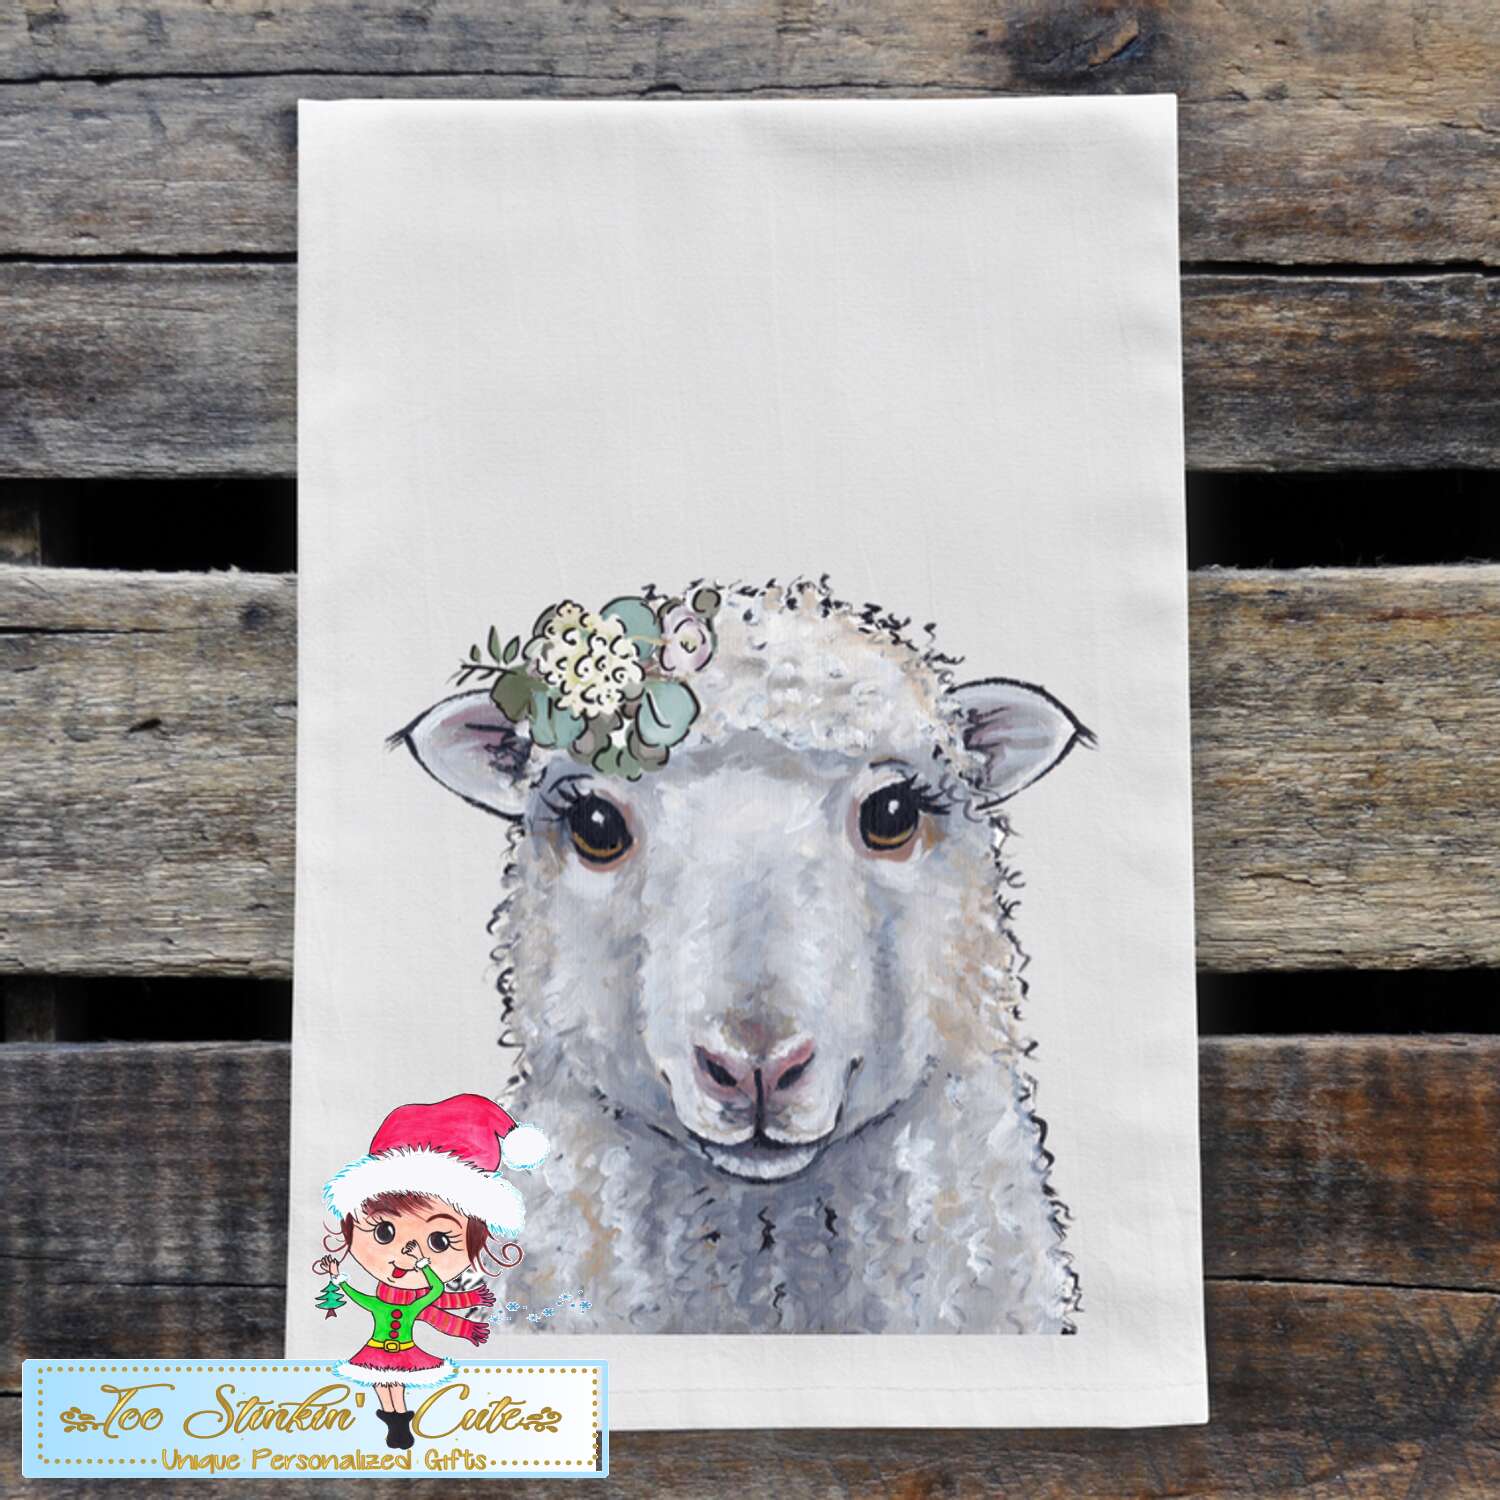 Neutral Sheep with Flowers Flour Sack Towel/ Tea Towel